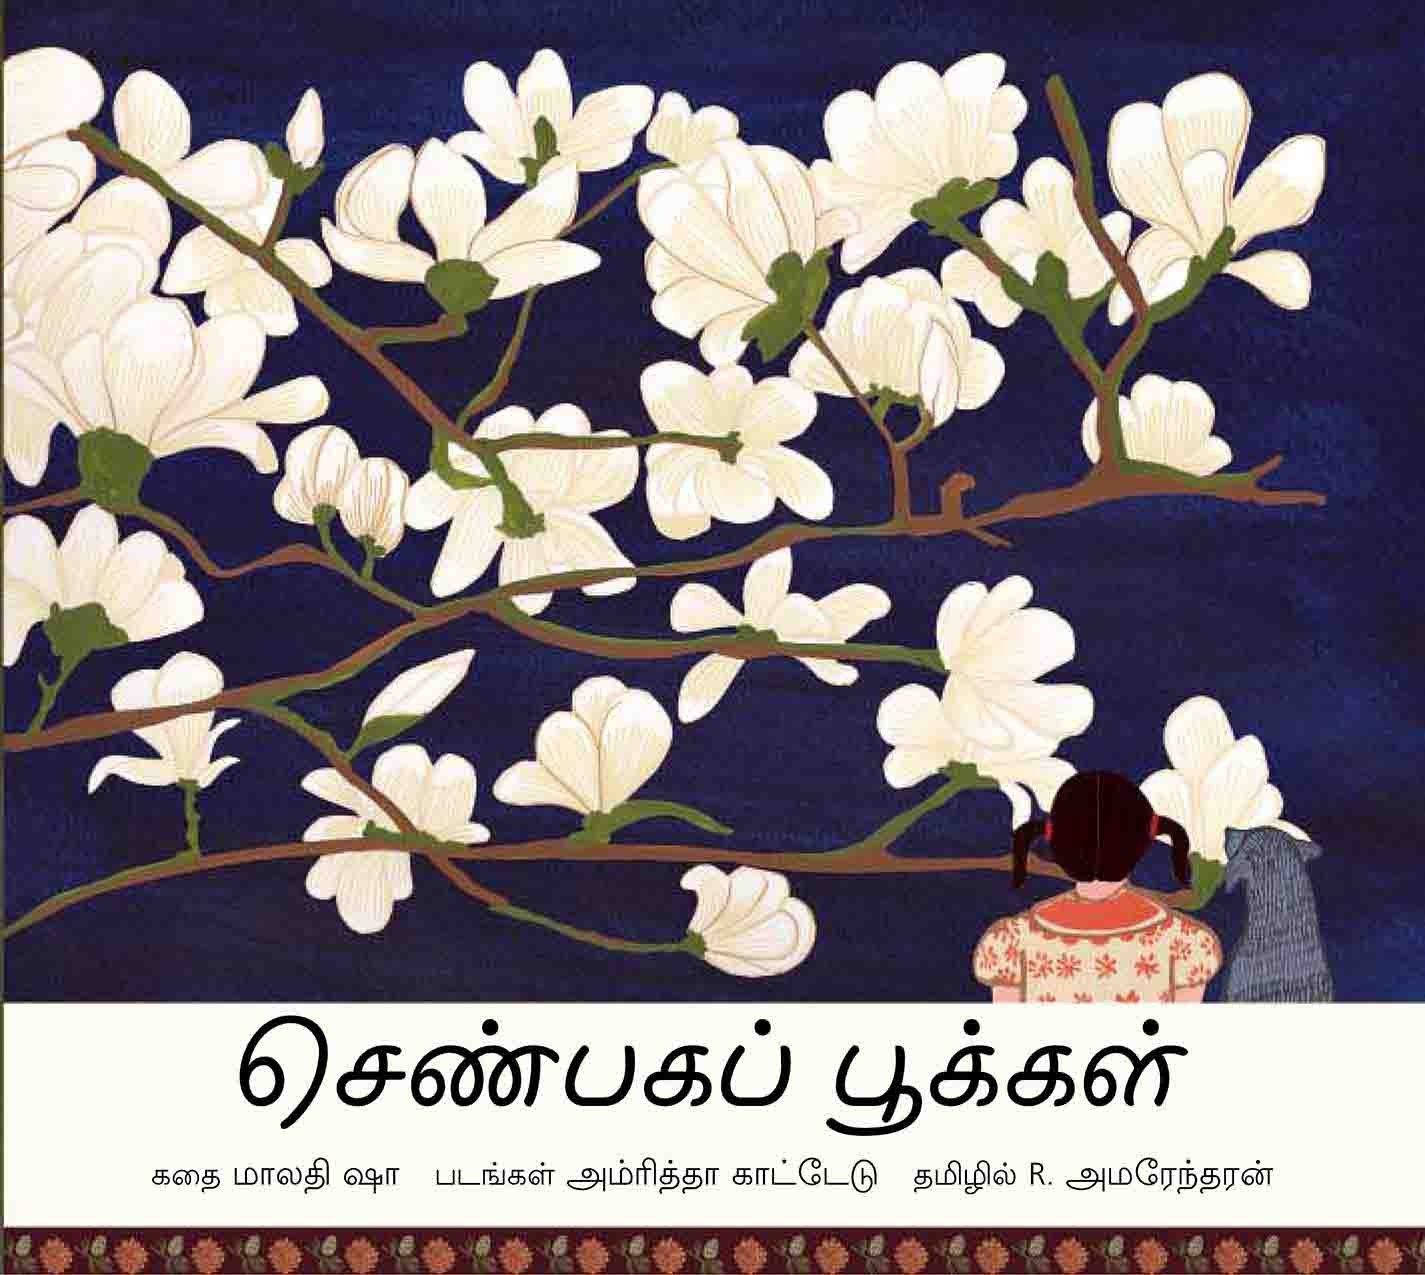 Magnolias/Shenbaga Pookkal (Tamil)